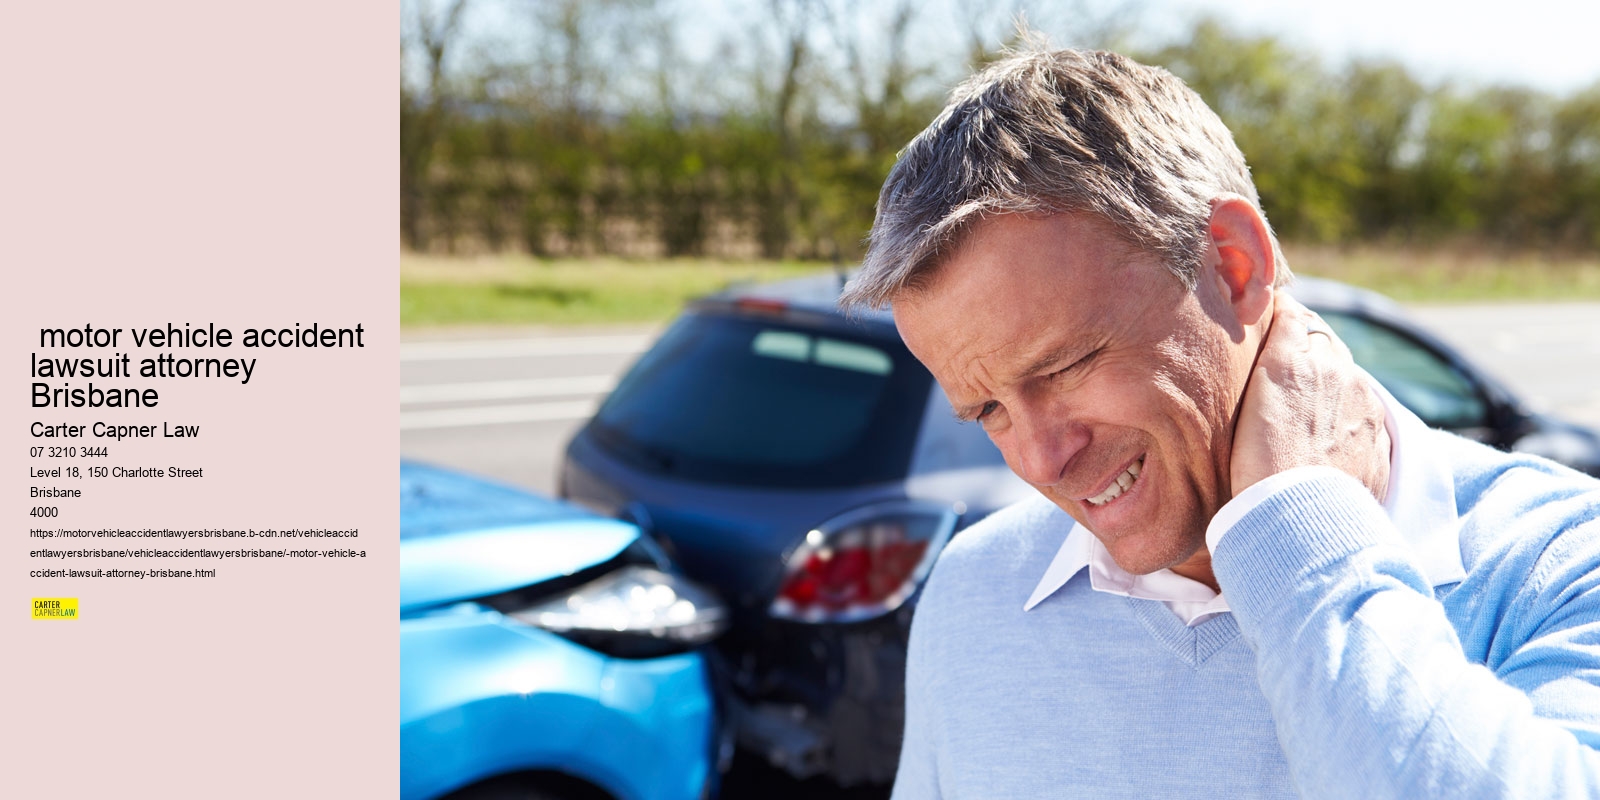  motor vehicle accident lawsuit attorney Brisbane      